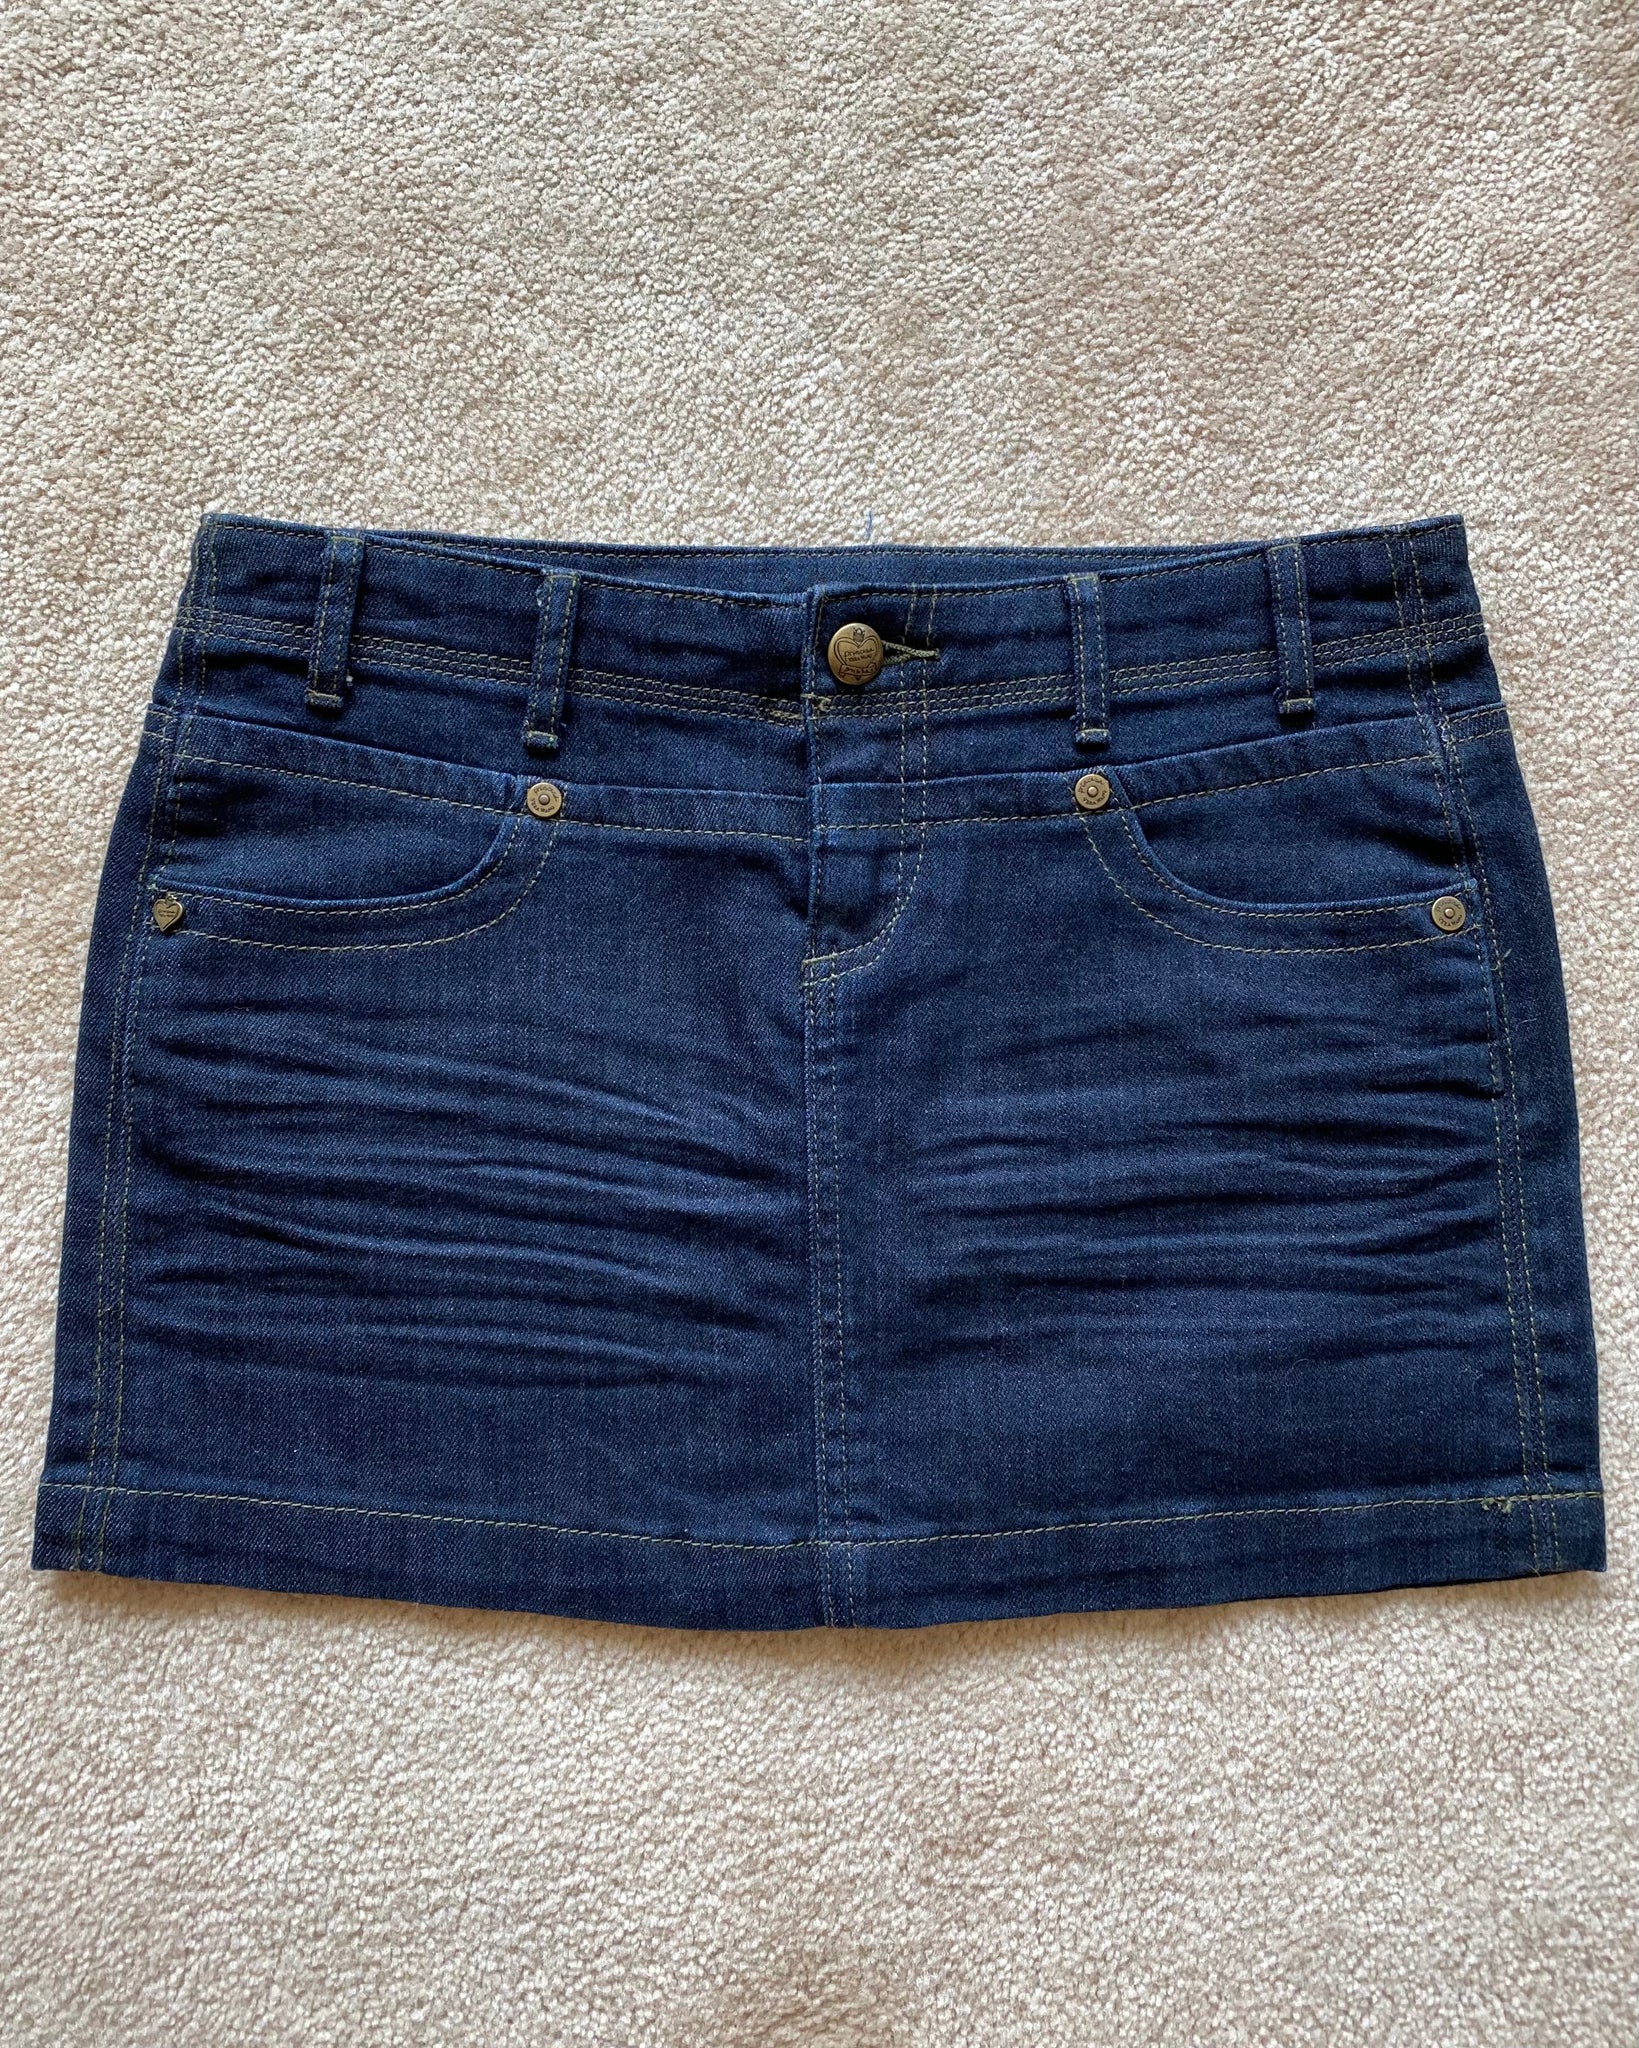 00s Dark Wash Micro Mini Denim Skirt (size 3)